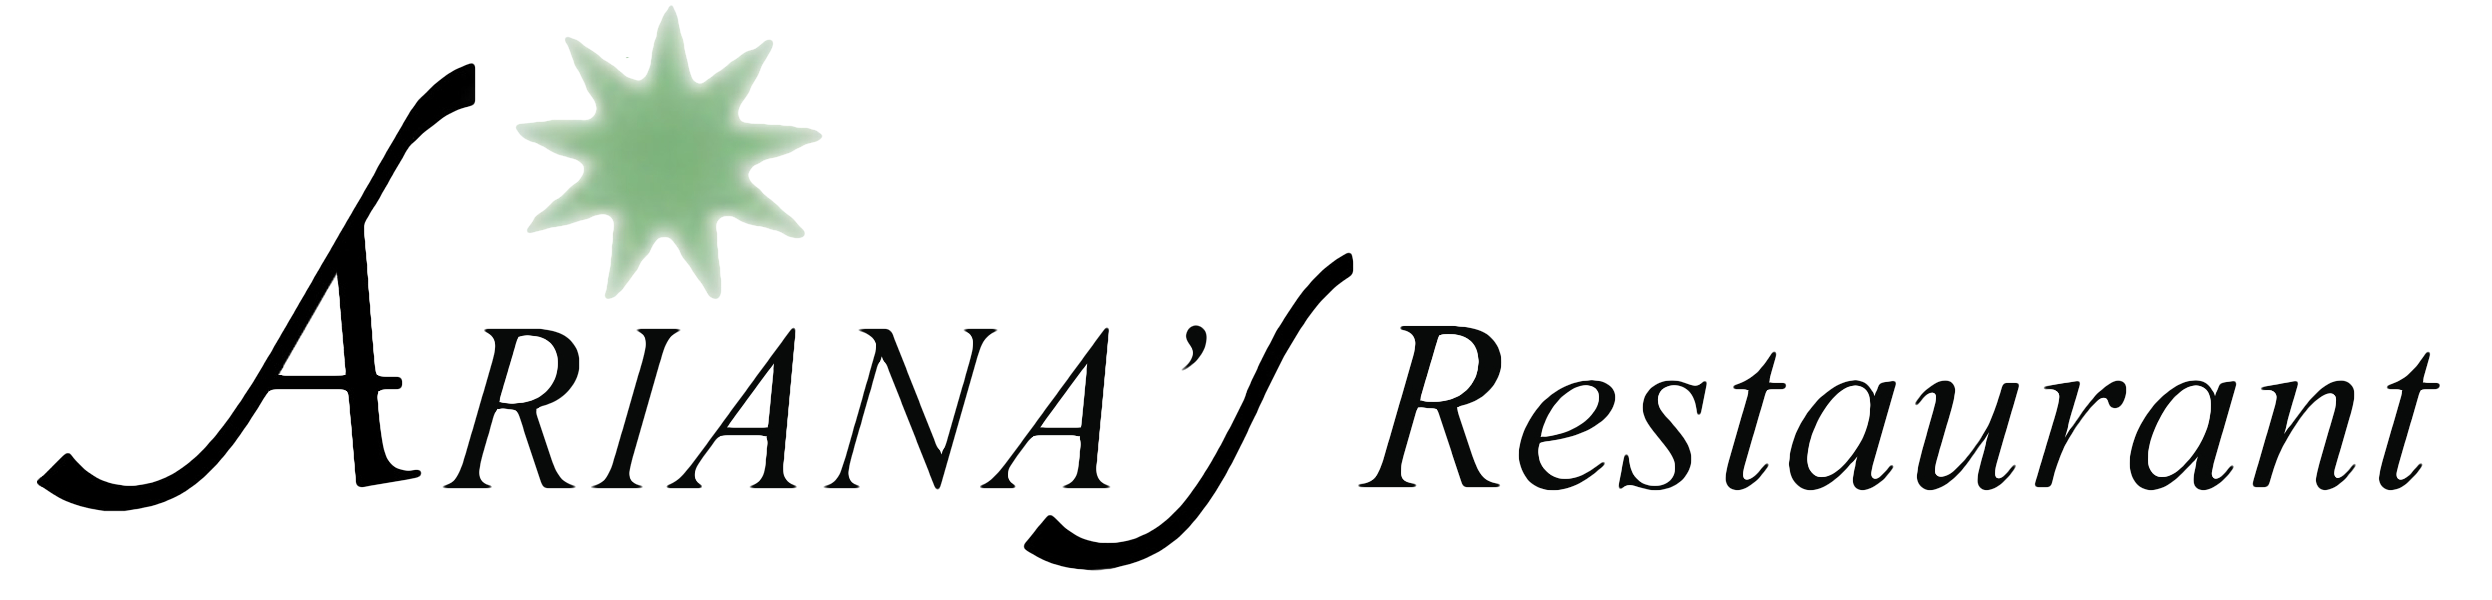 Ariana's Restaurant logo